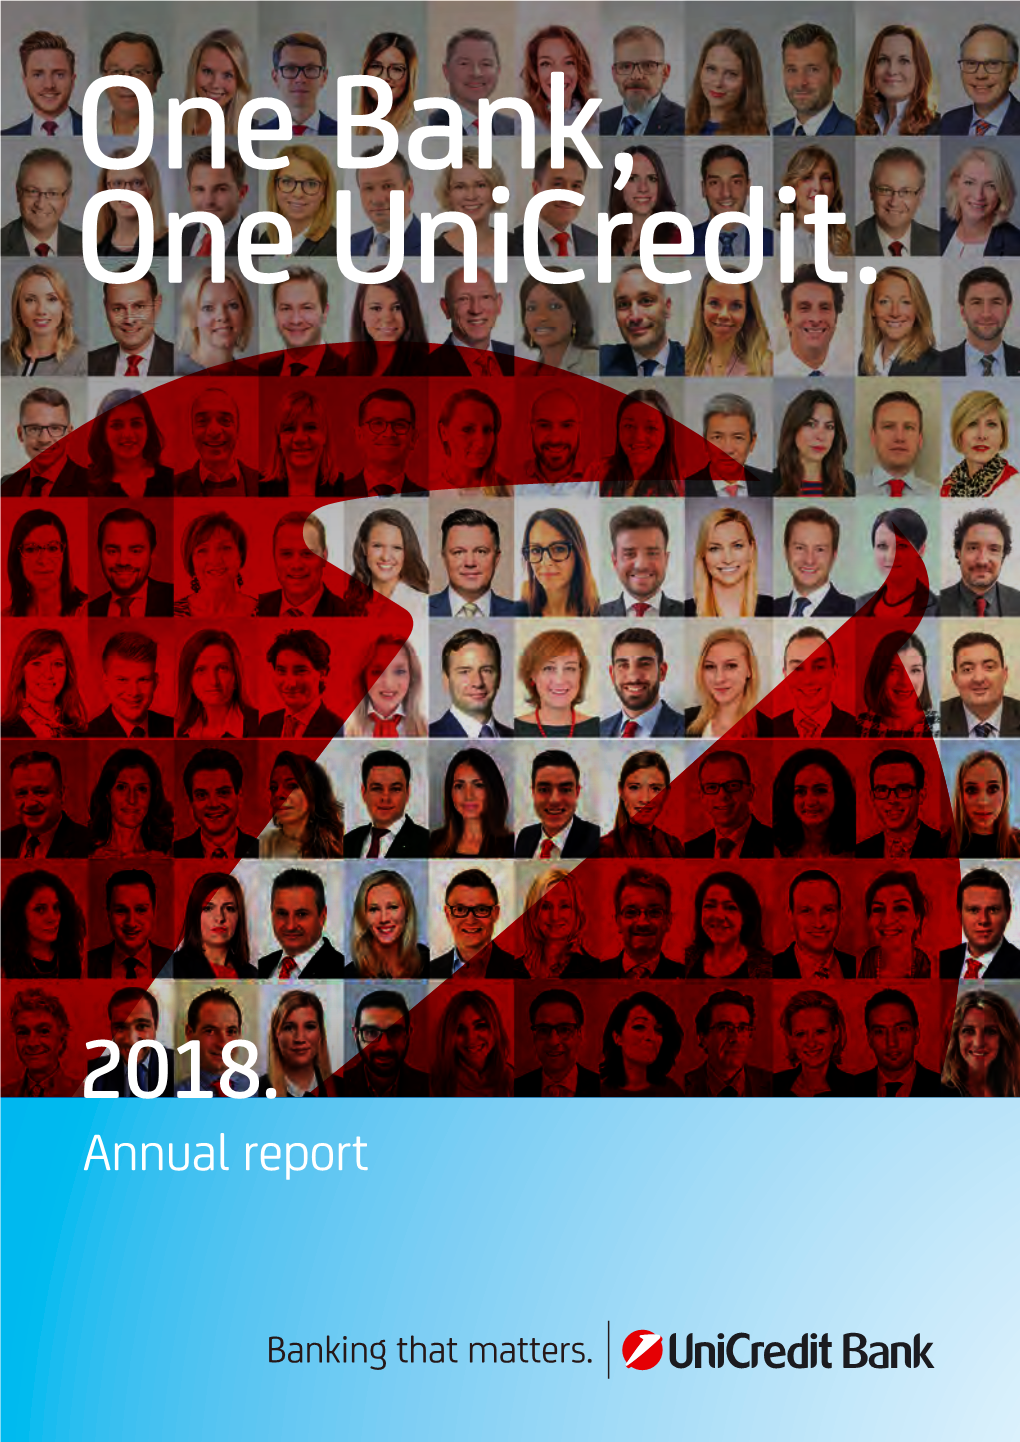 Annual Report VISION